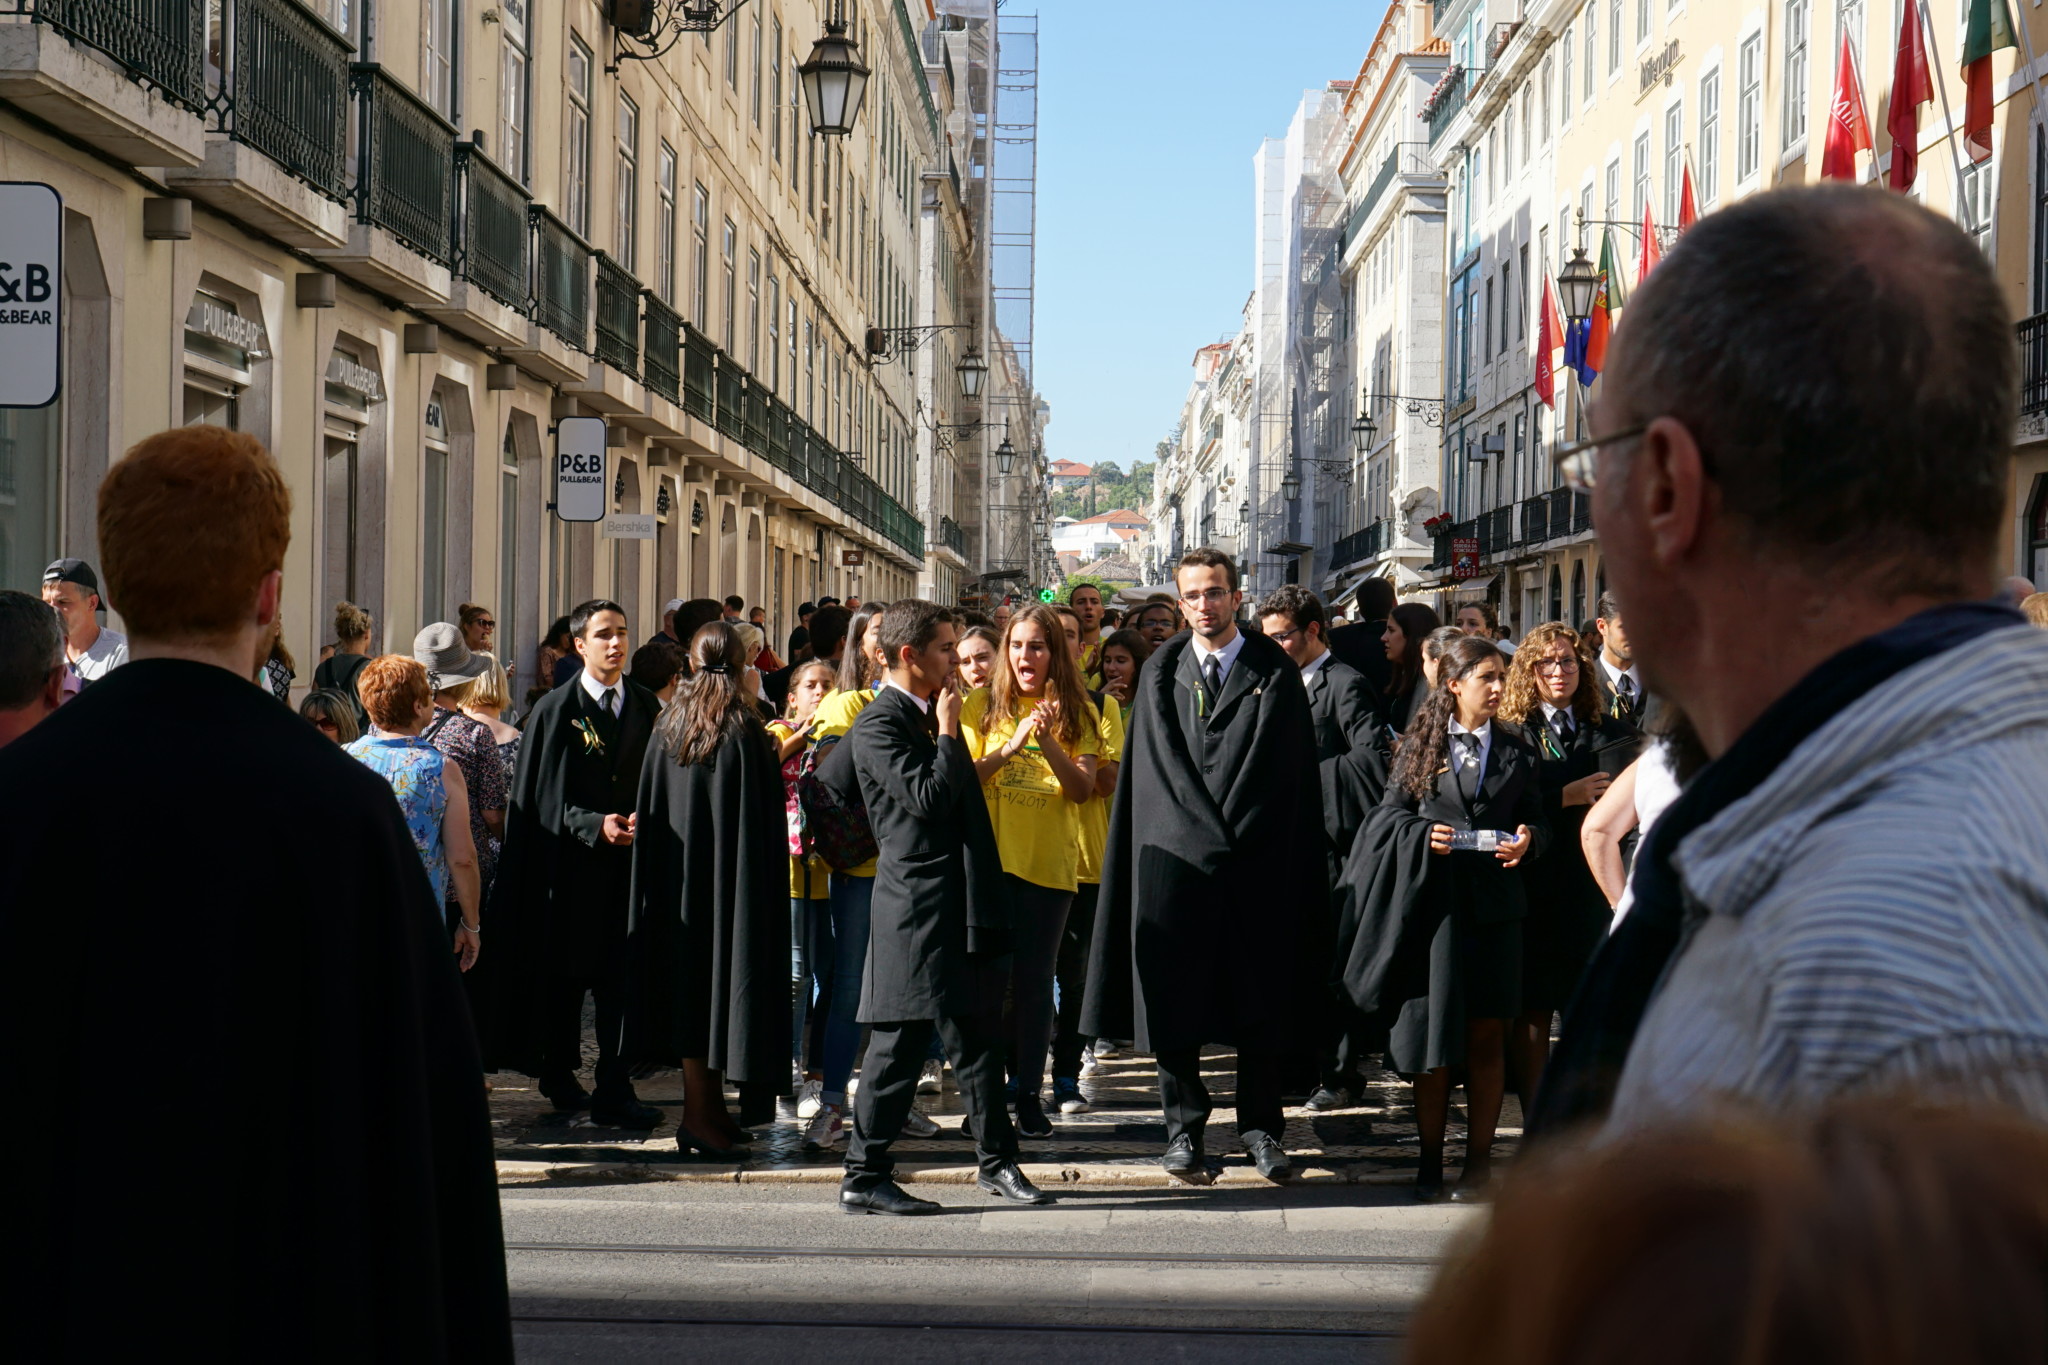 Groups of new students in Lisbon's Baixa neighbourhood